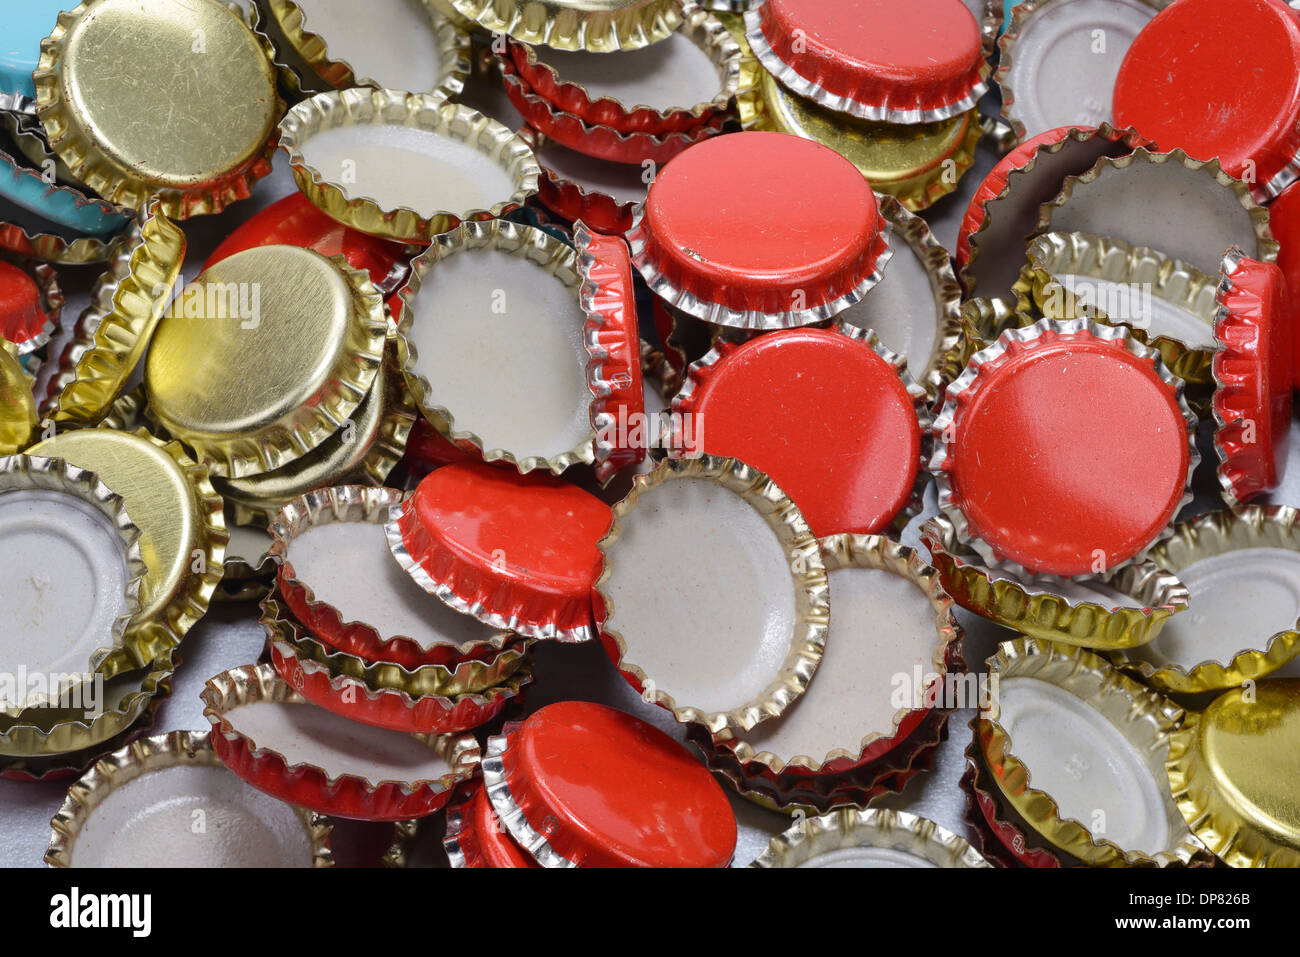 Pile of crown cork bottle caps Stock Photo